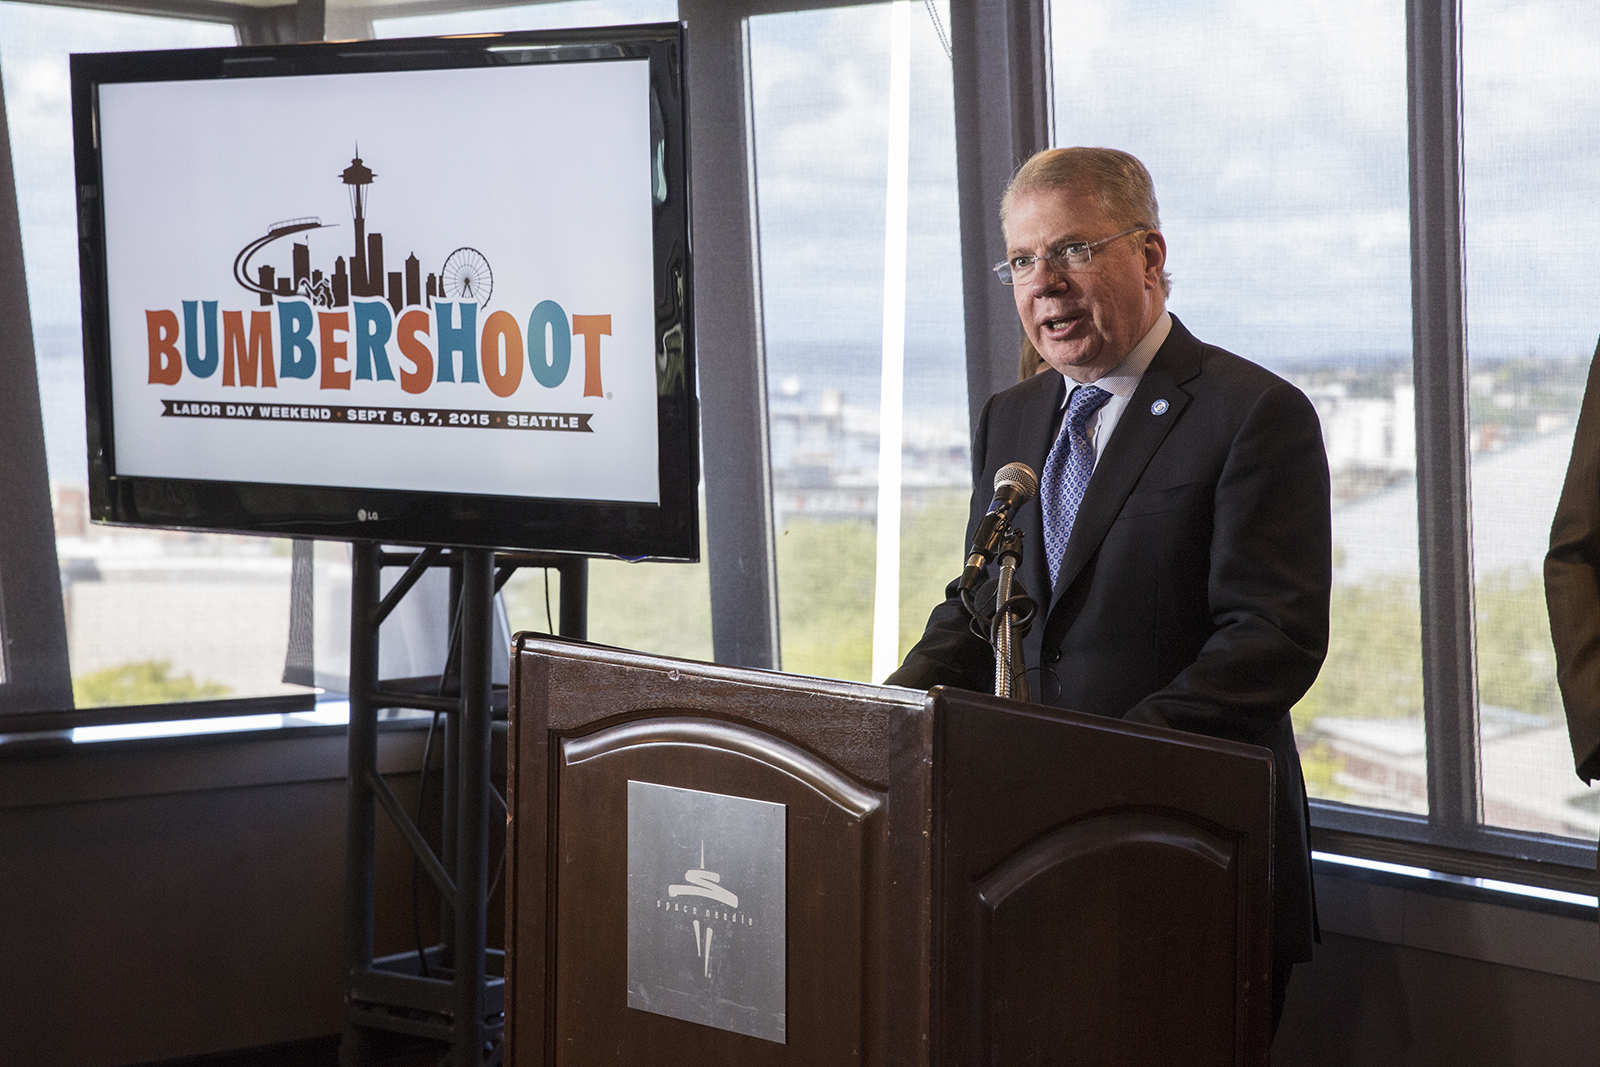 Mayor Ed Murray Bumbershoot 2015 Announcement  Photo by Alex Crick